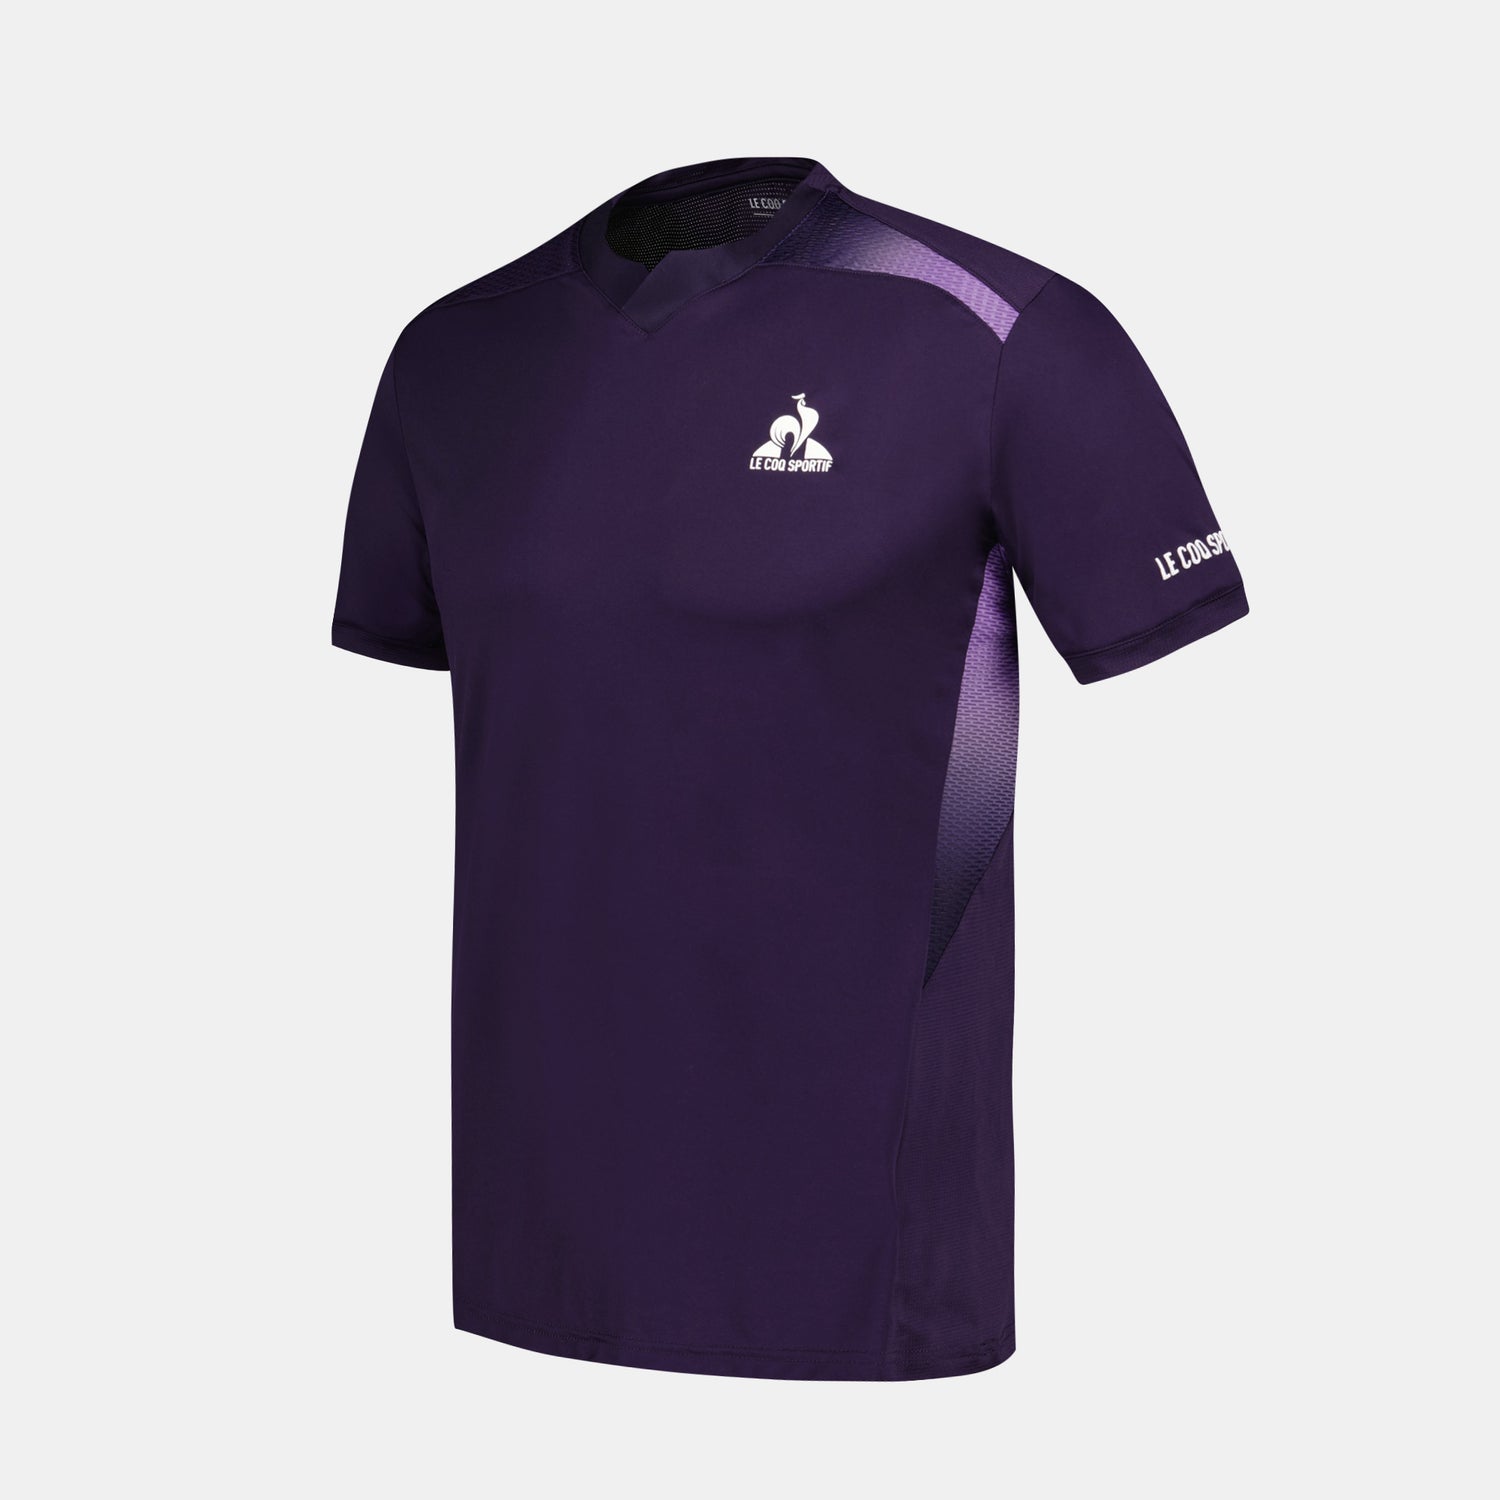 2410516-TENNIS PRO Tee SS 24 N°1 M purple velvet  | Camiseta Hombre